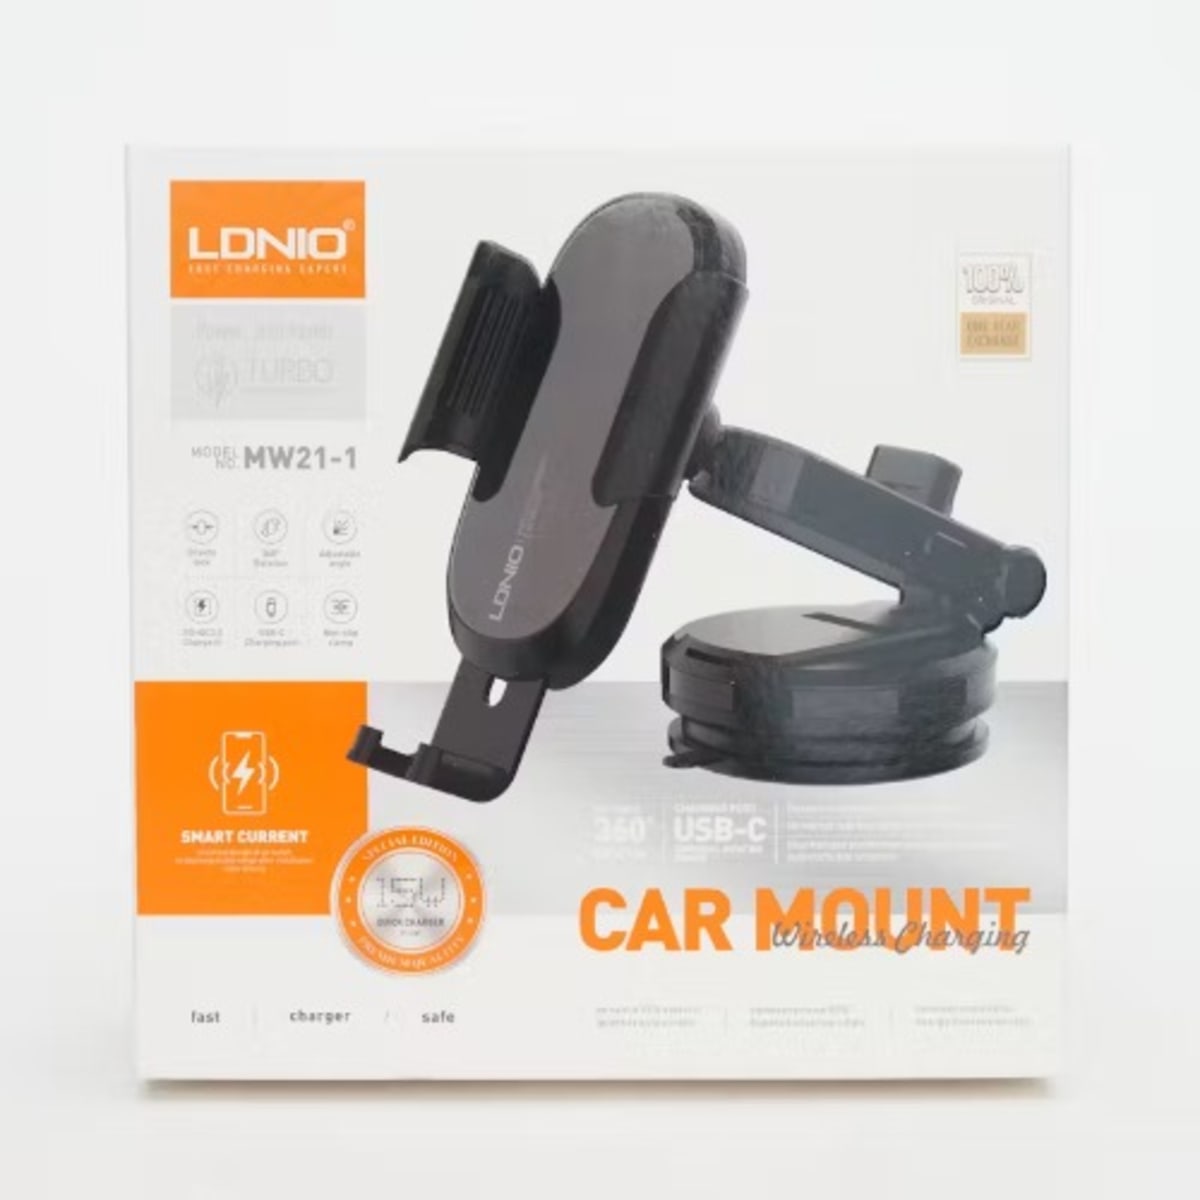 LDNIO Mw21-1 15w Wireless Charging Car Mount